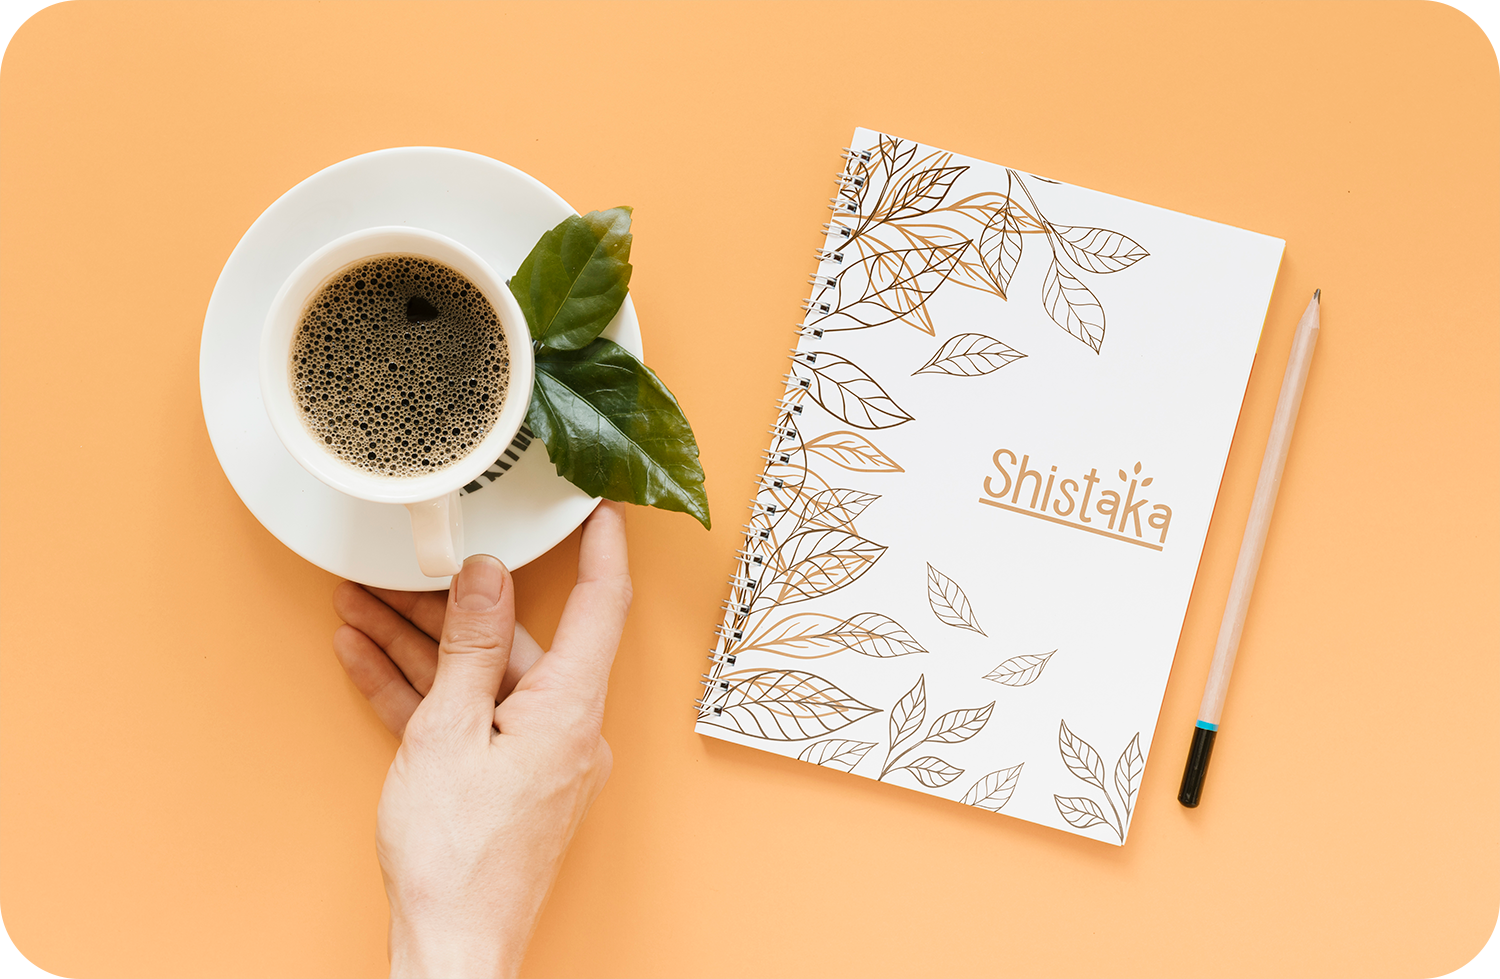 Shistaka - Introducing the world to a new world of garden fresh teas